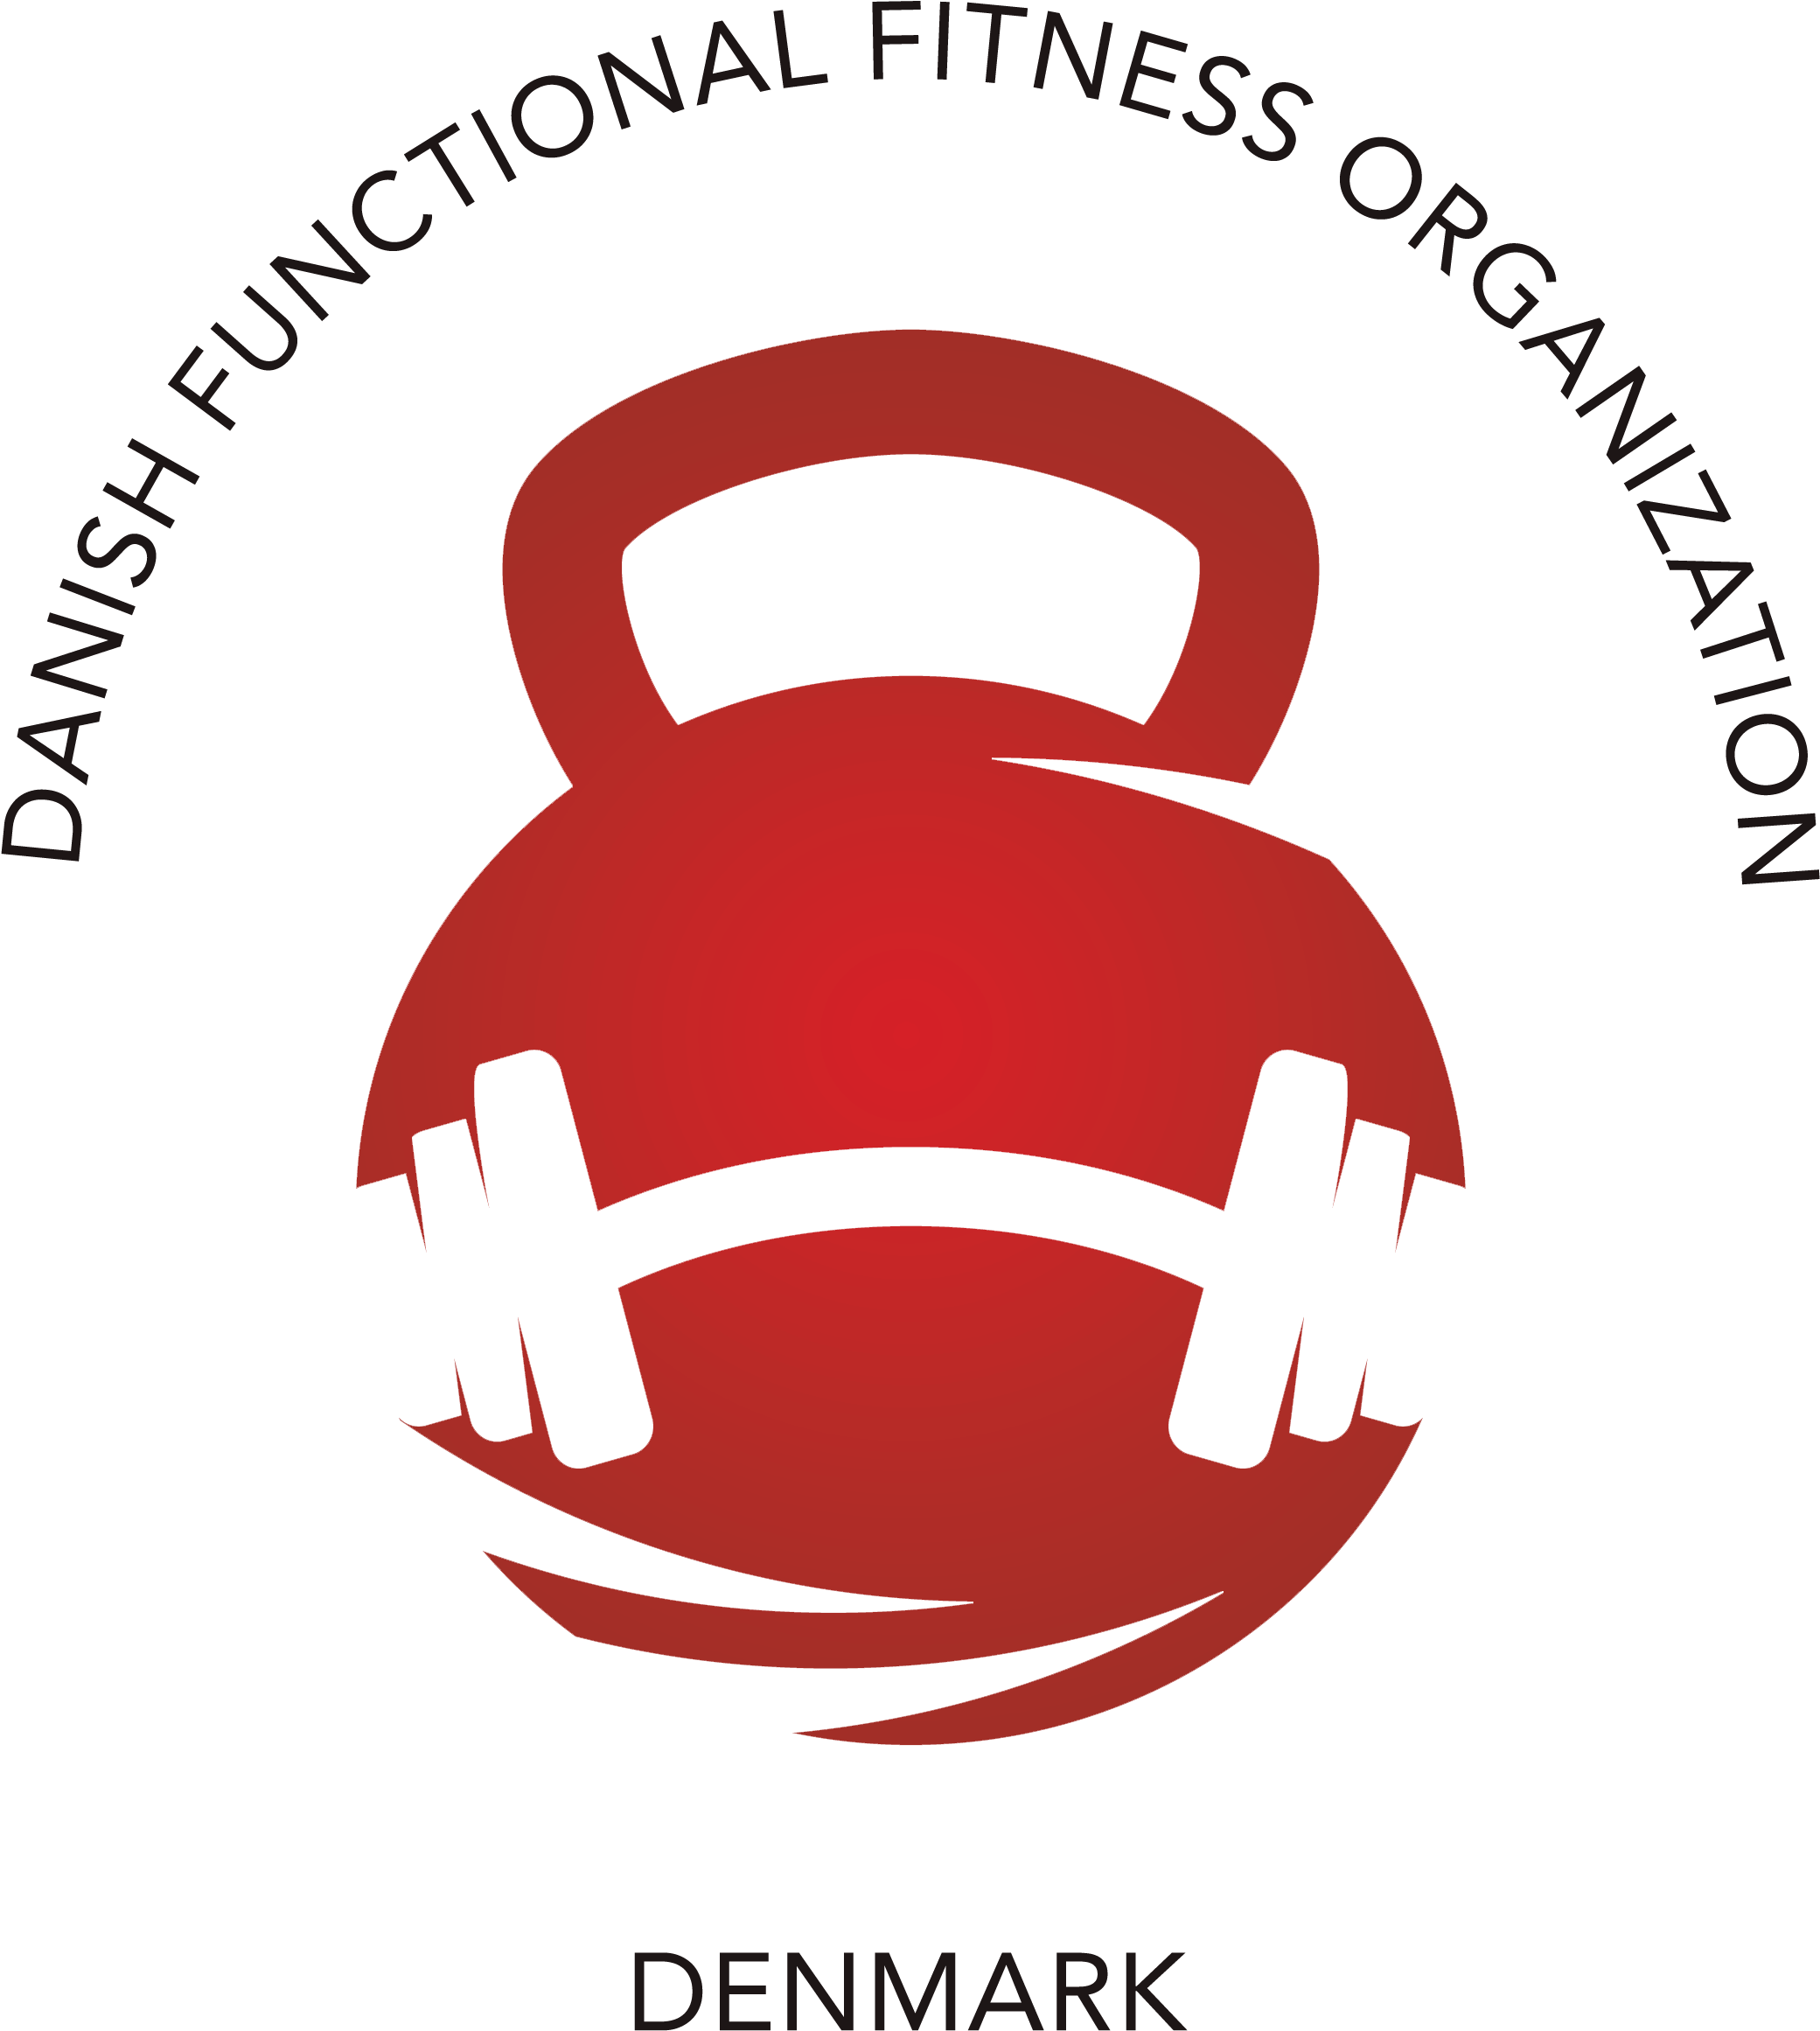 Danish Functional Fitness Organization Announced International - Kettlebell (2413x2608)